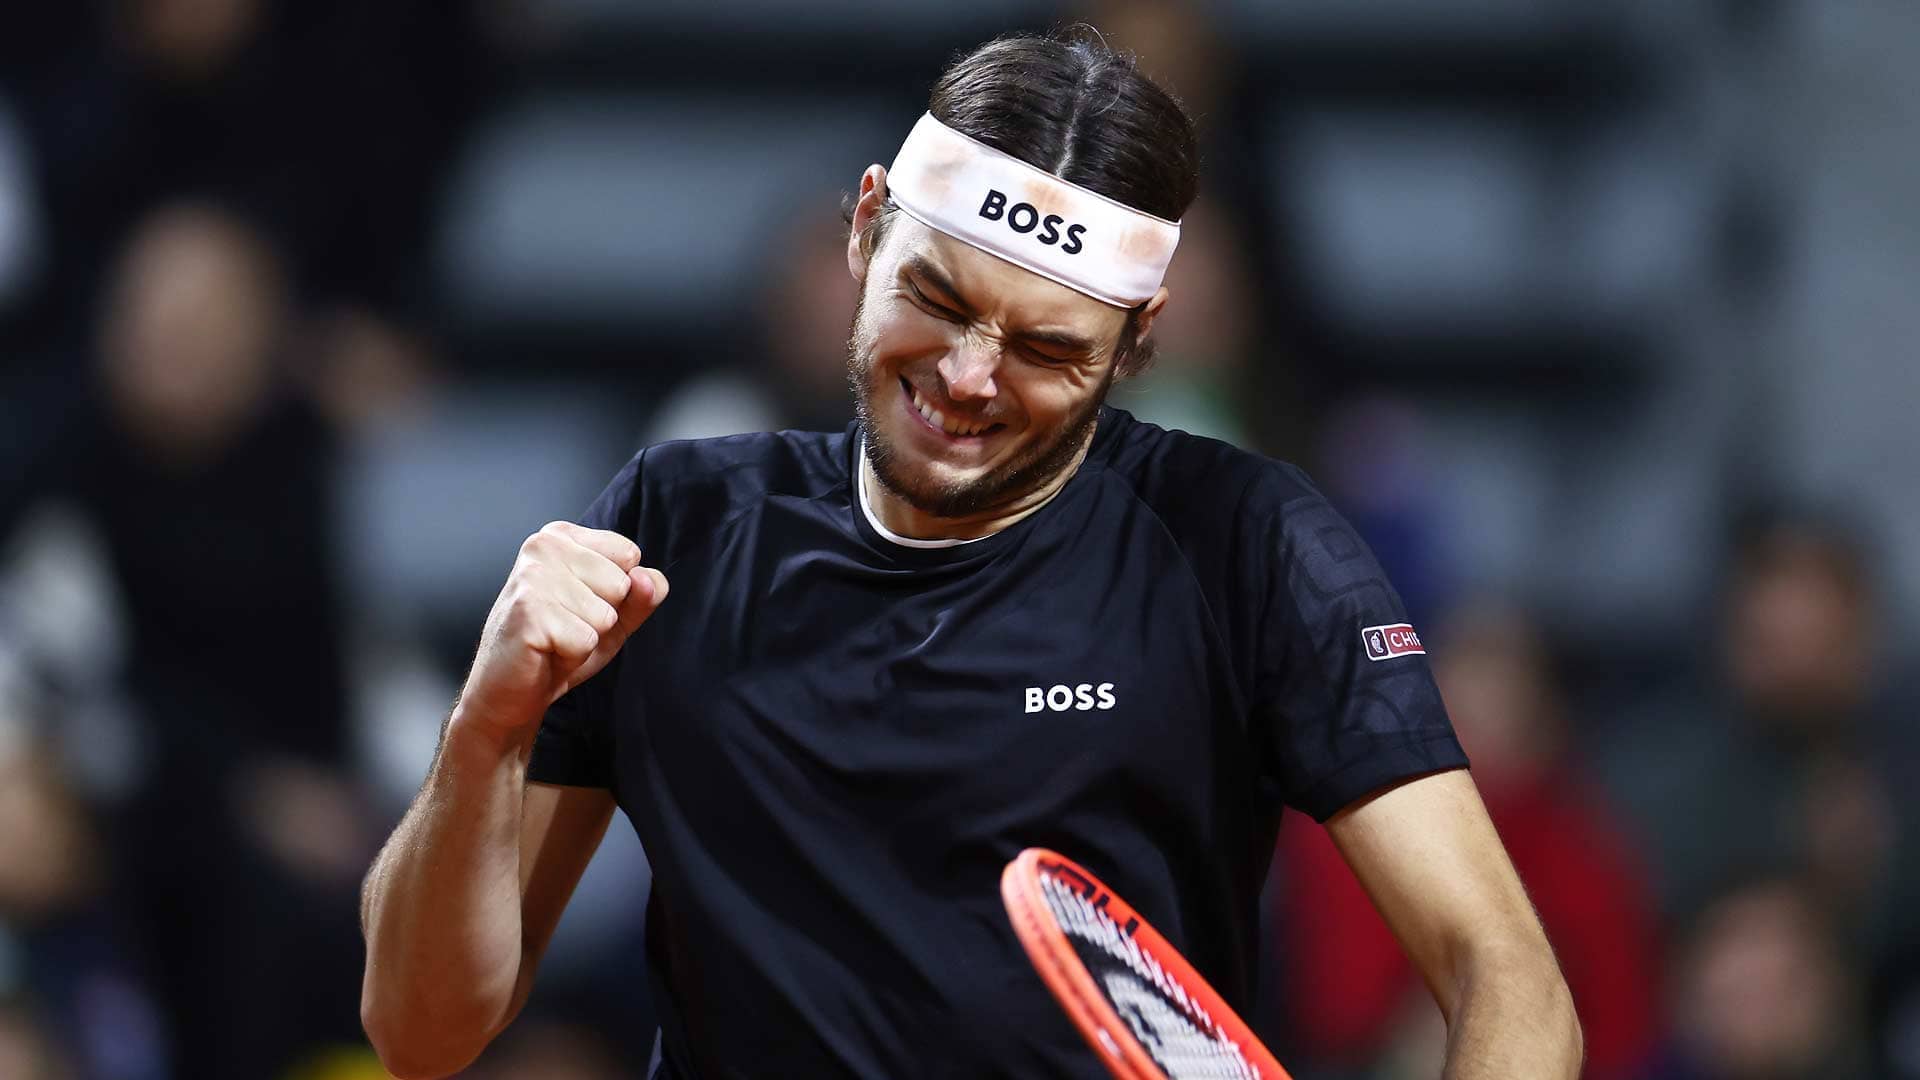 Fritz fends off Kokkinakis comeback in late-night Roland Garros slugfest